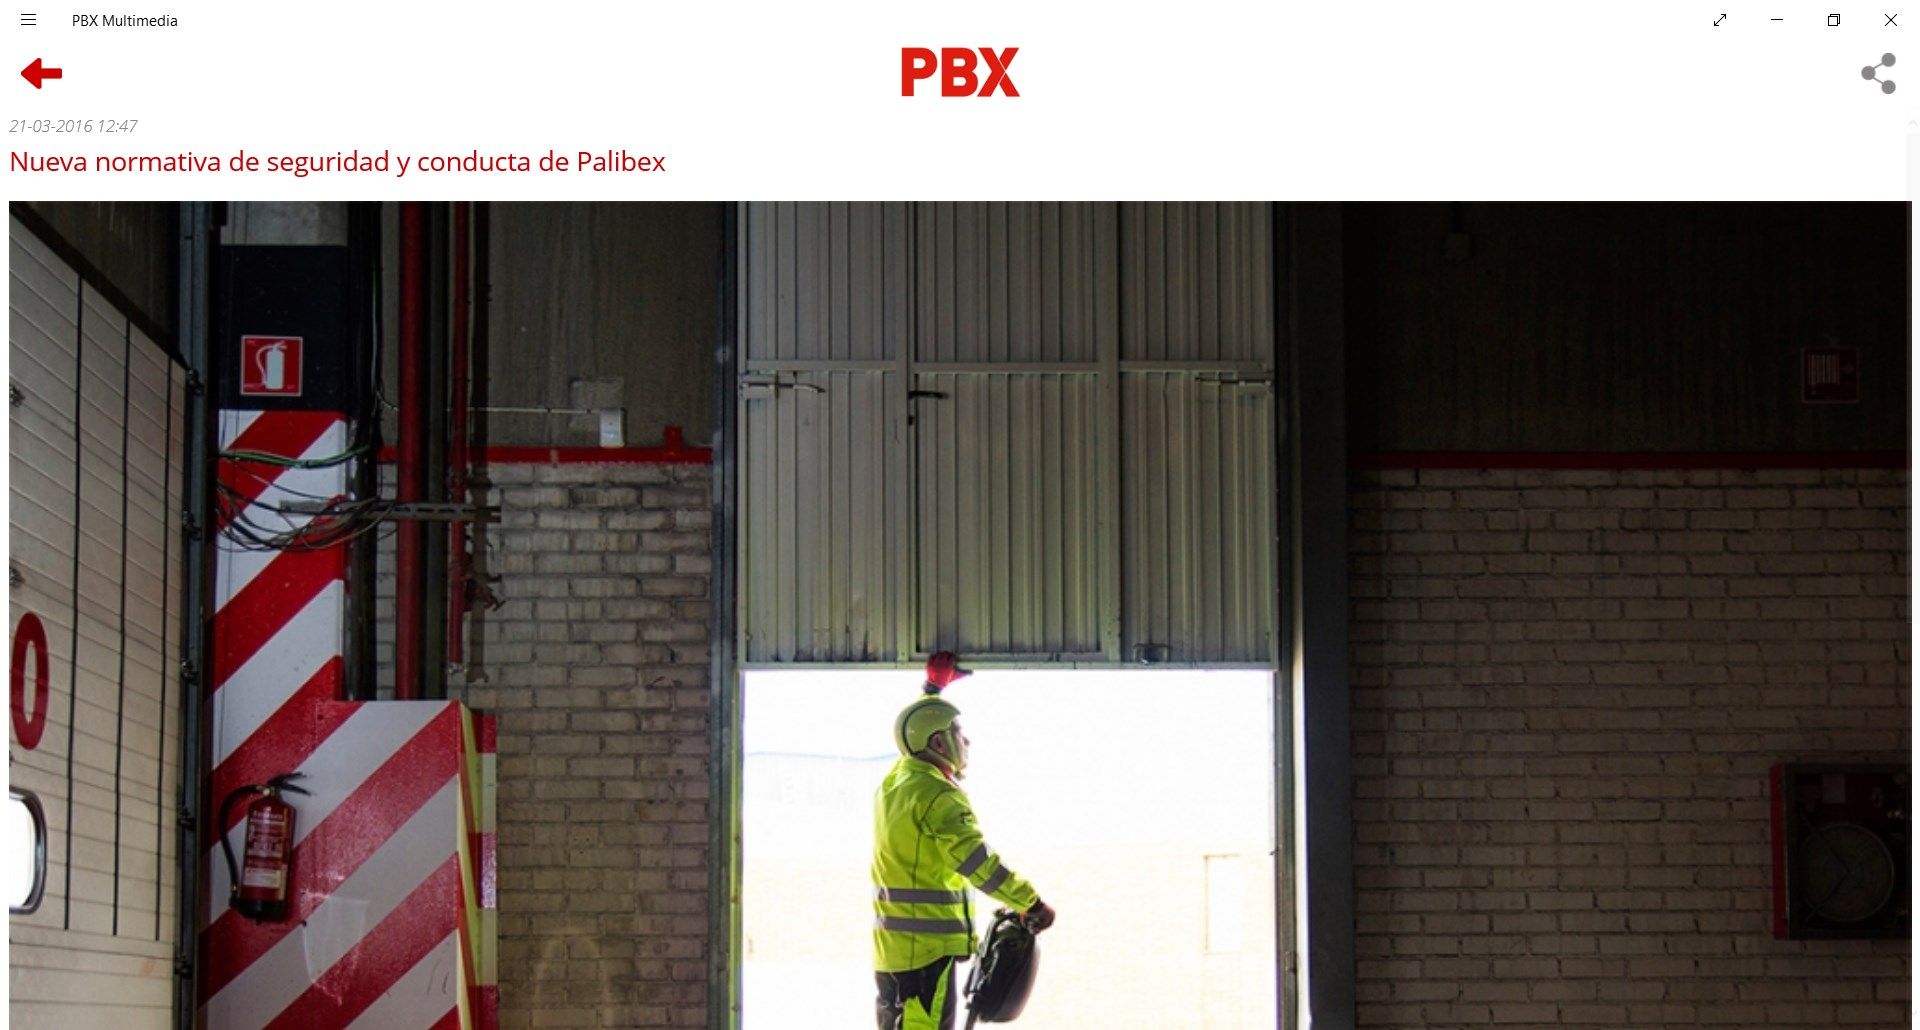 PBX Multimedia